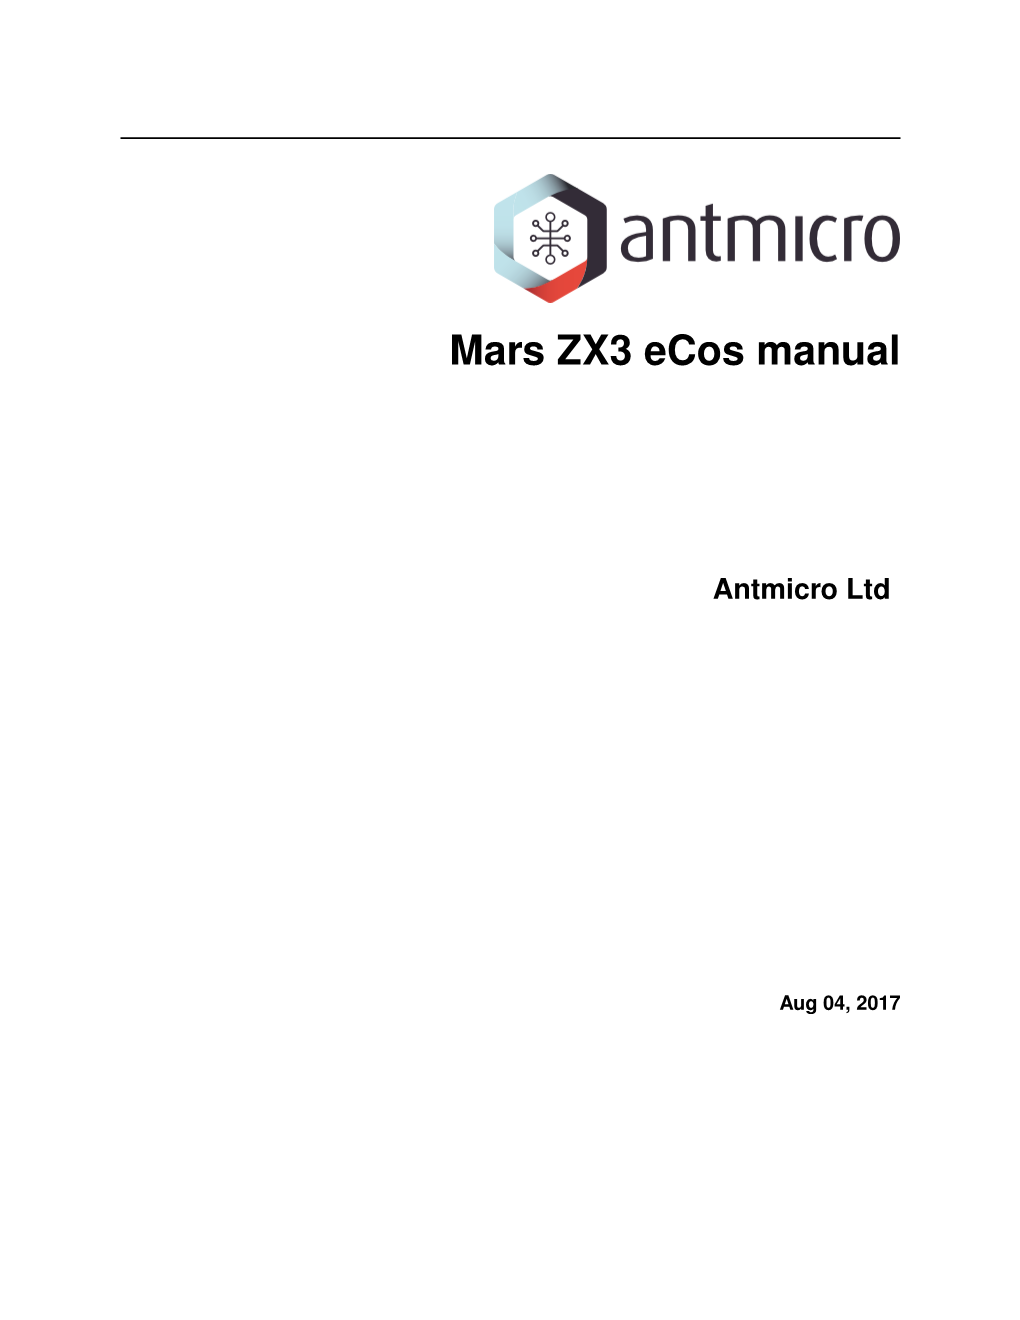 Mars ZX3 Ecos Manual